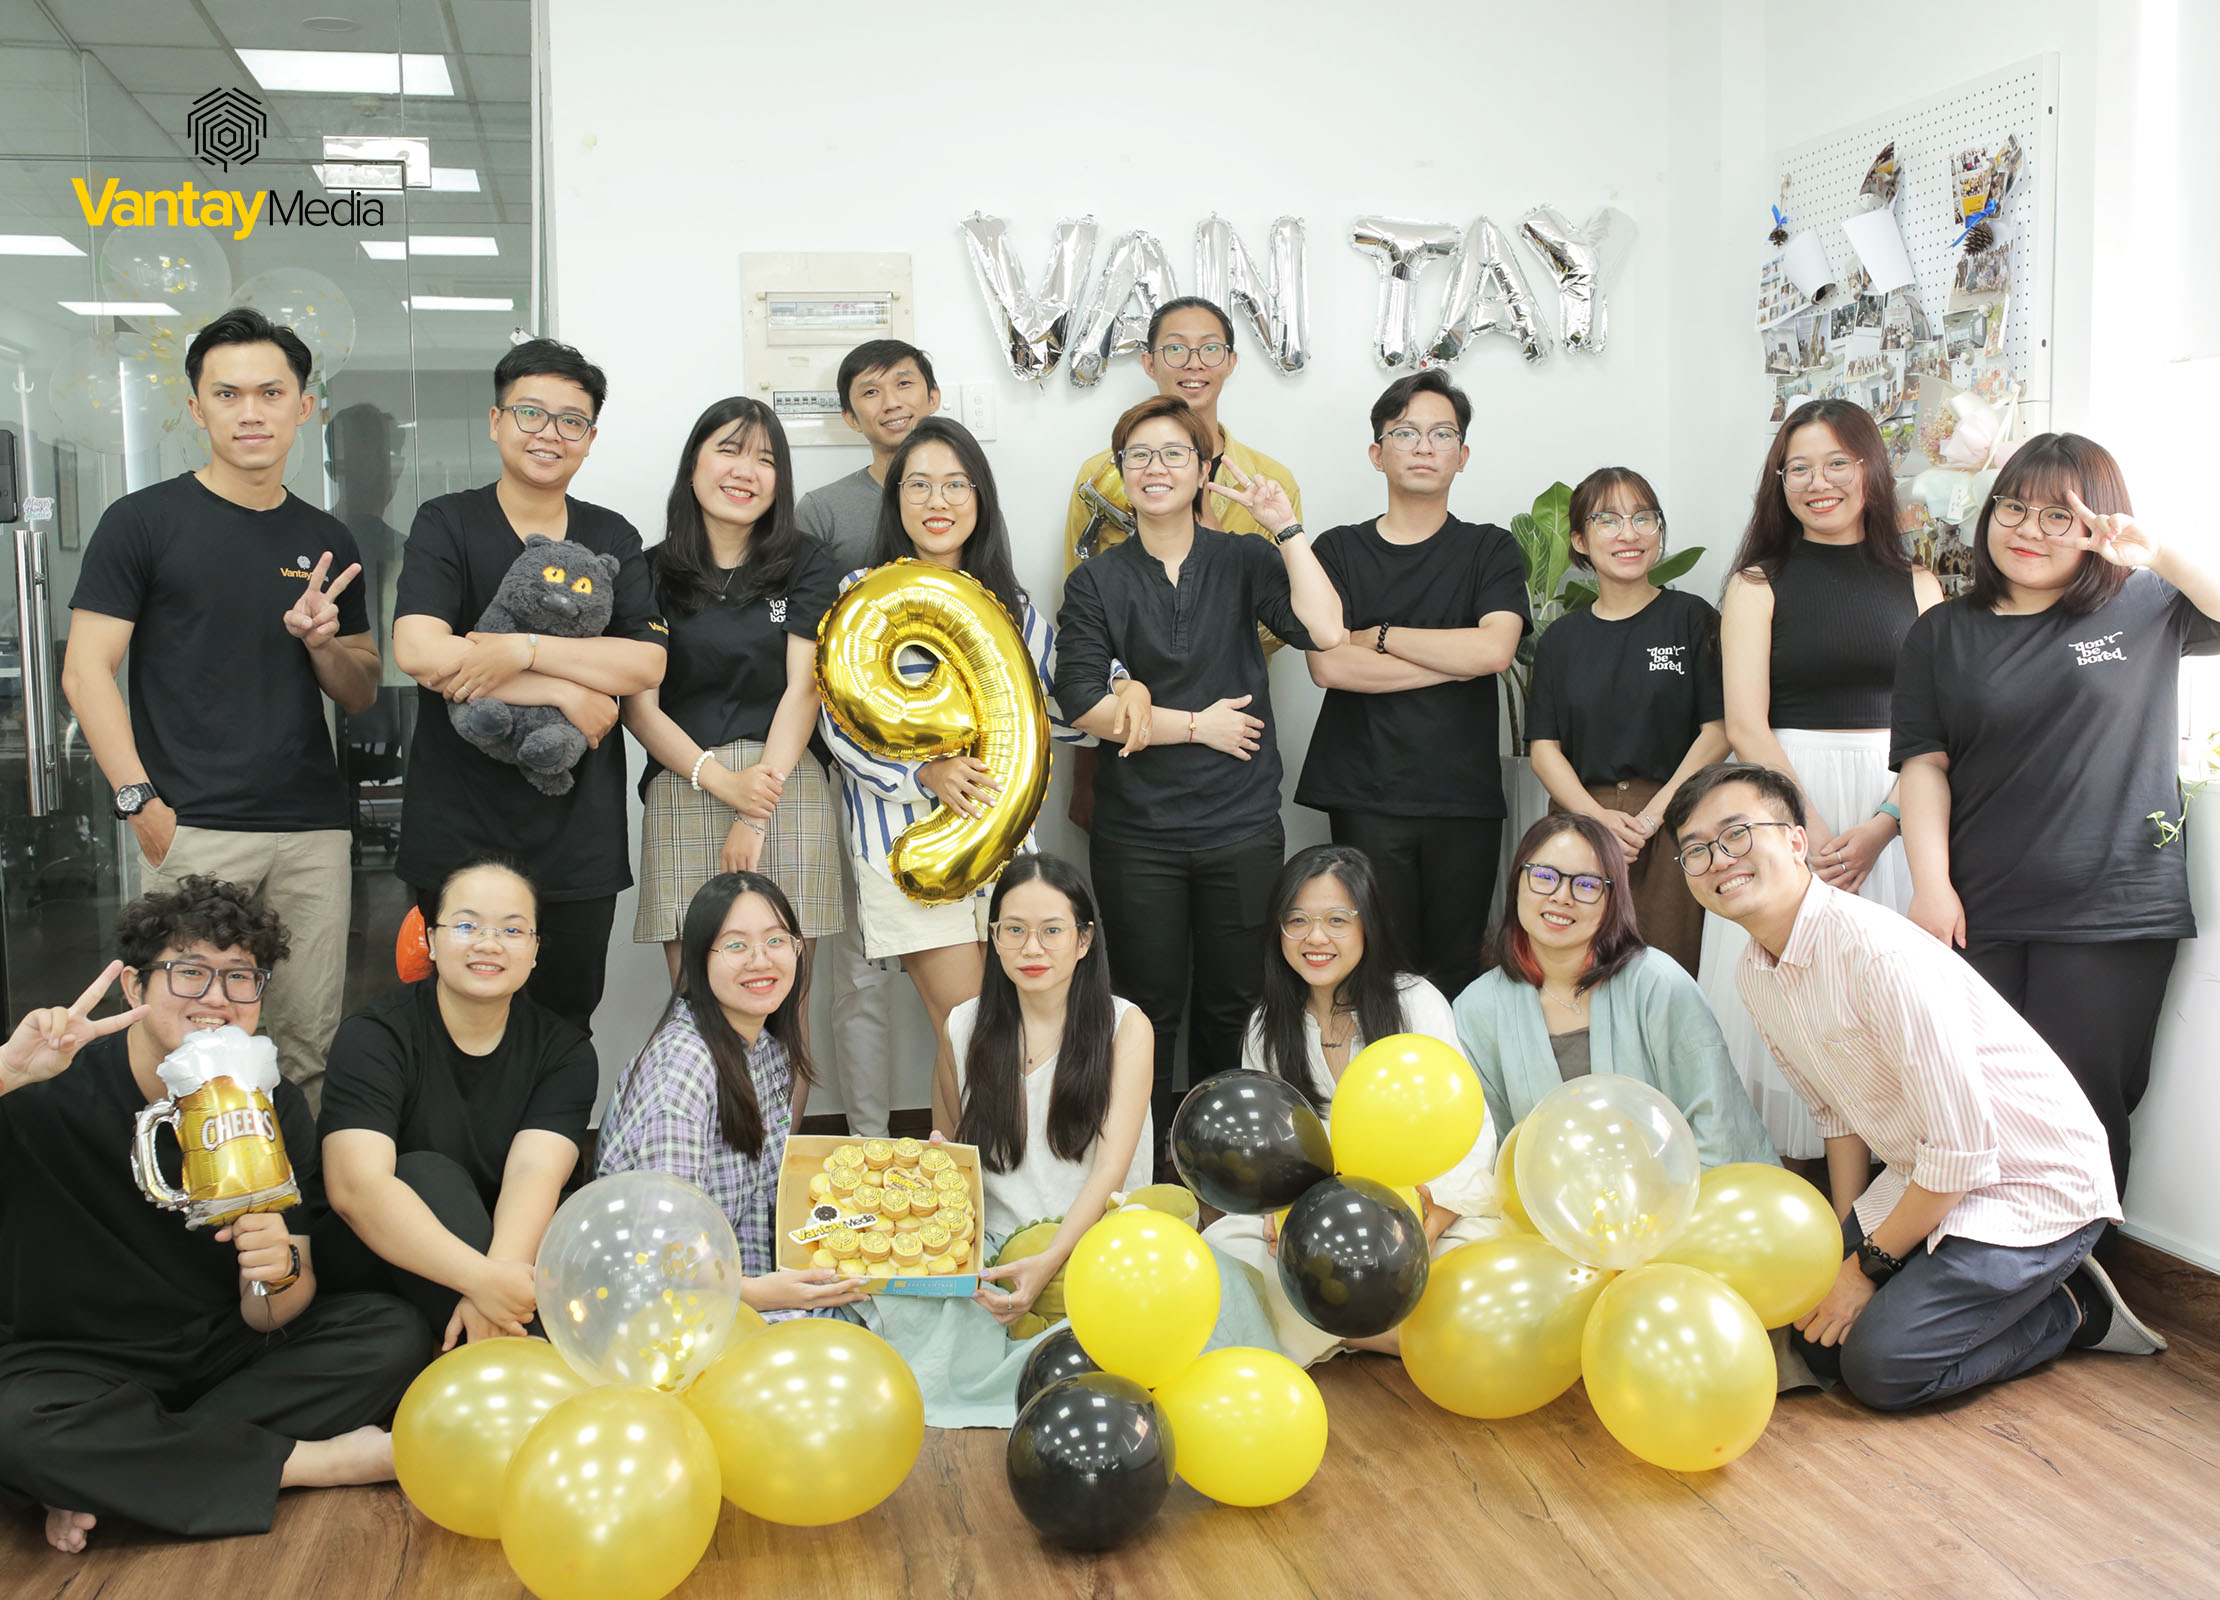 Happy 9th birthday Van Tay Media (10/04/2014 – 10/04/2023)